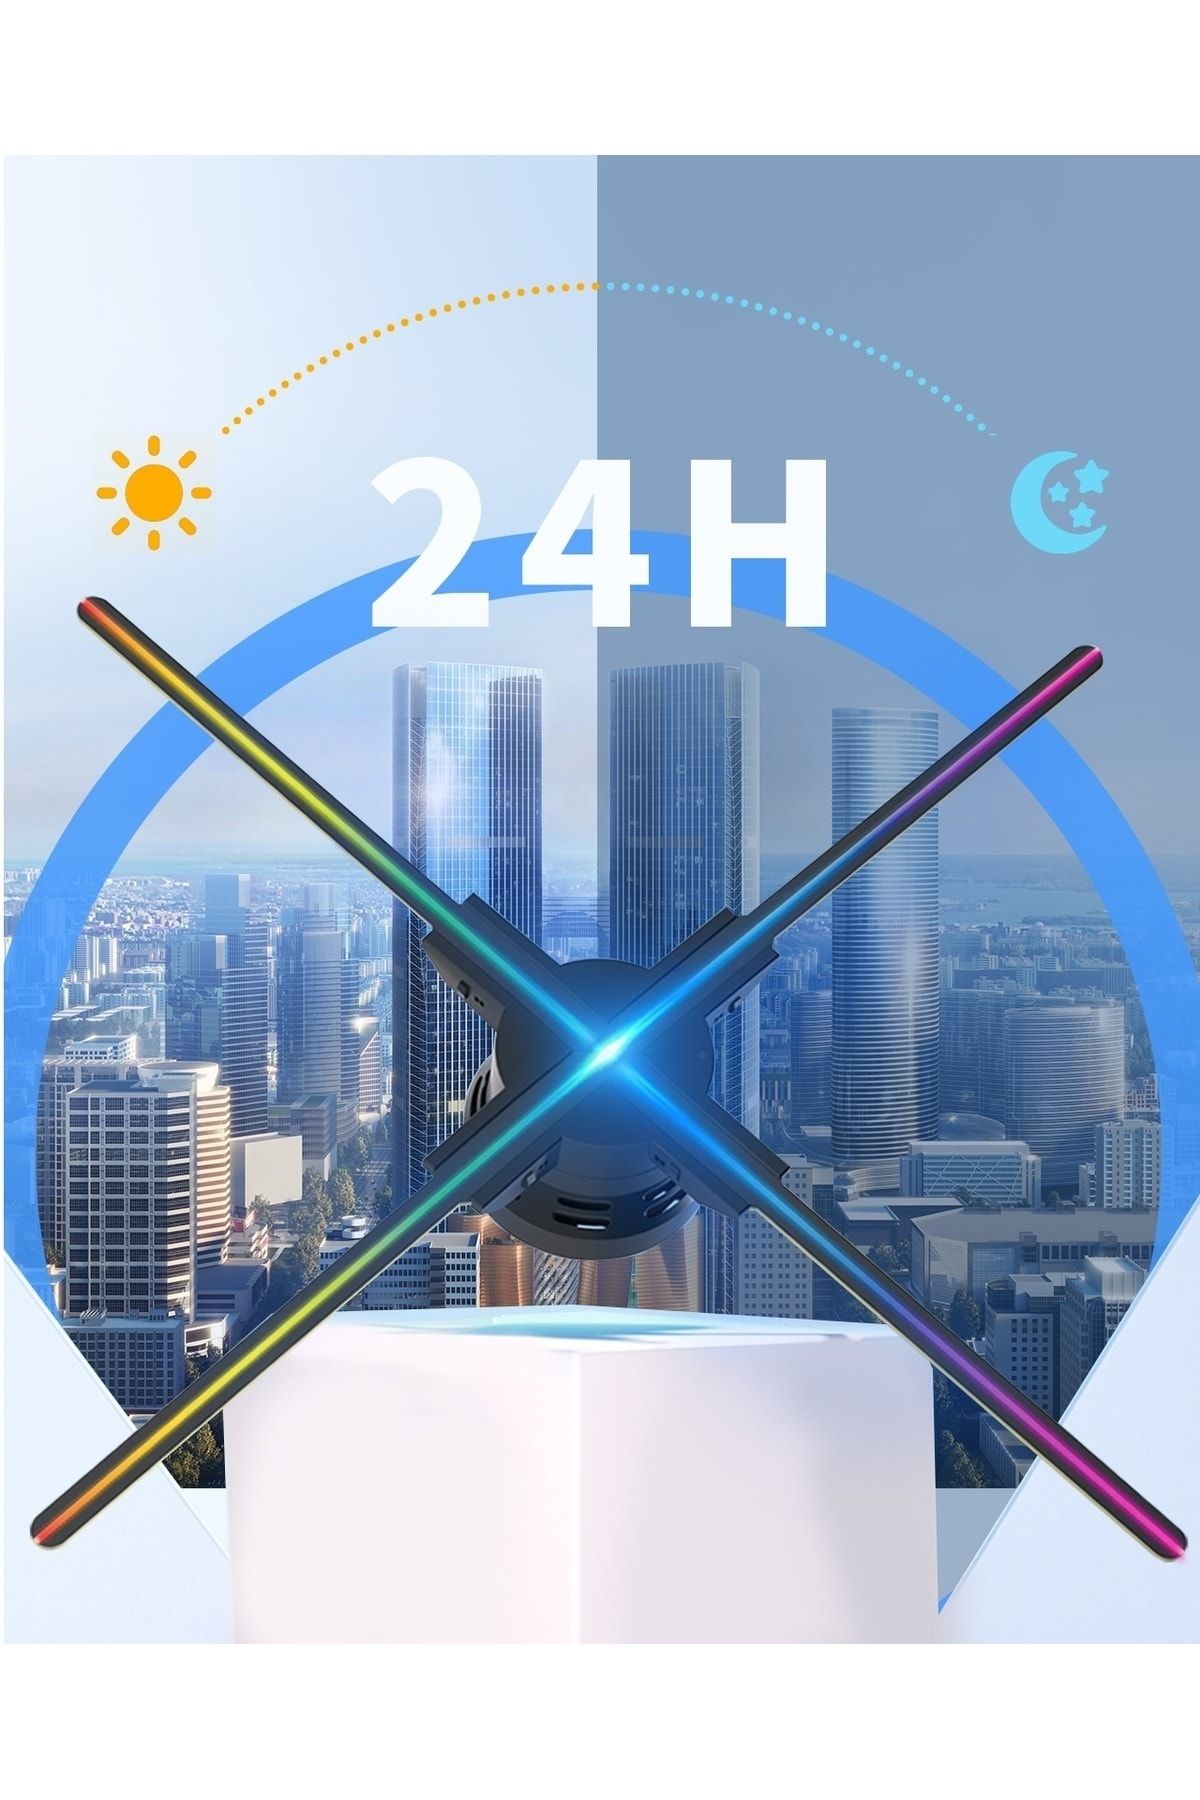 teknospy 3D Fan Hologram Projektör Logo Led Ekran 576 LED 3 Boyutlu Holografik Reklam Wifi Foto Video 52 Cm